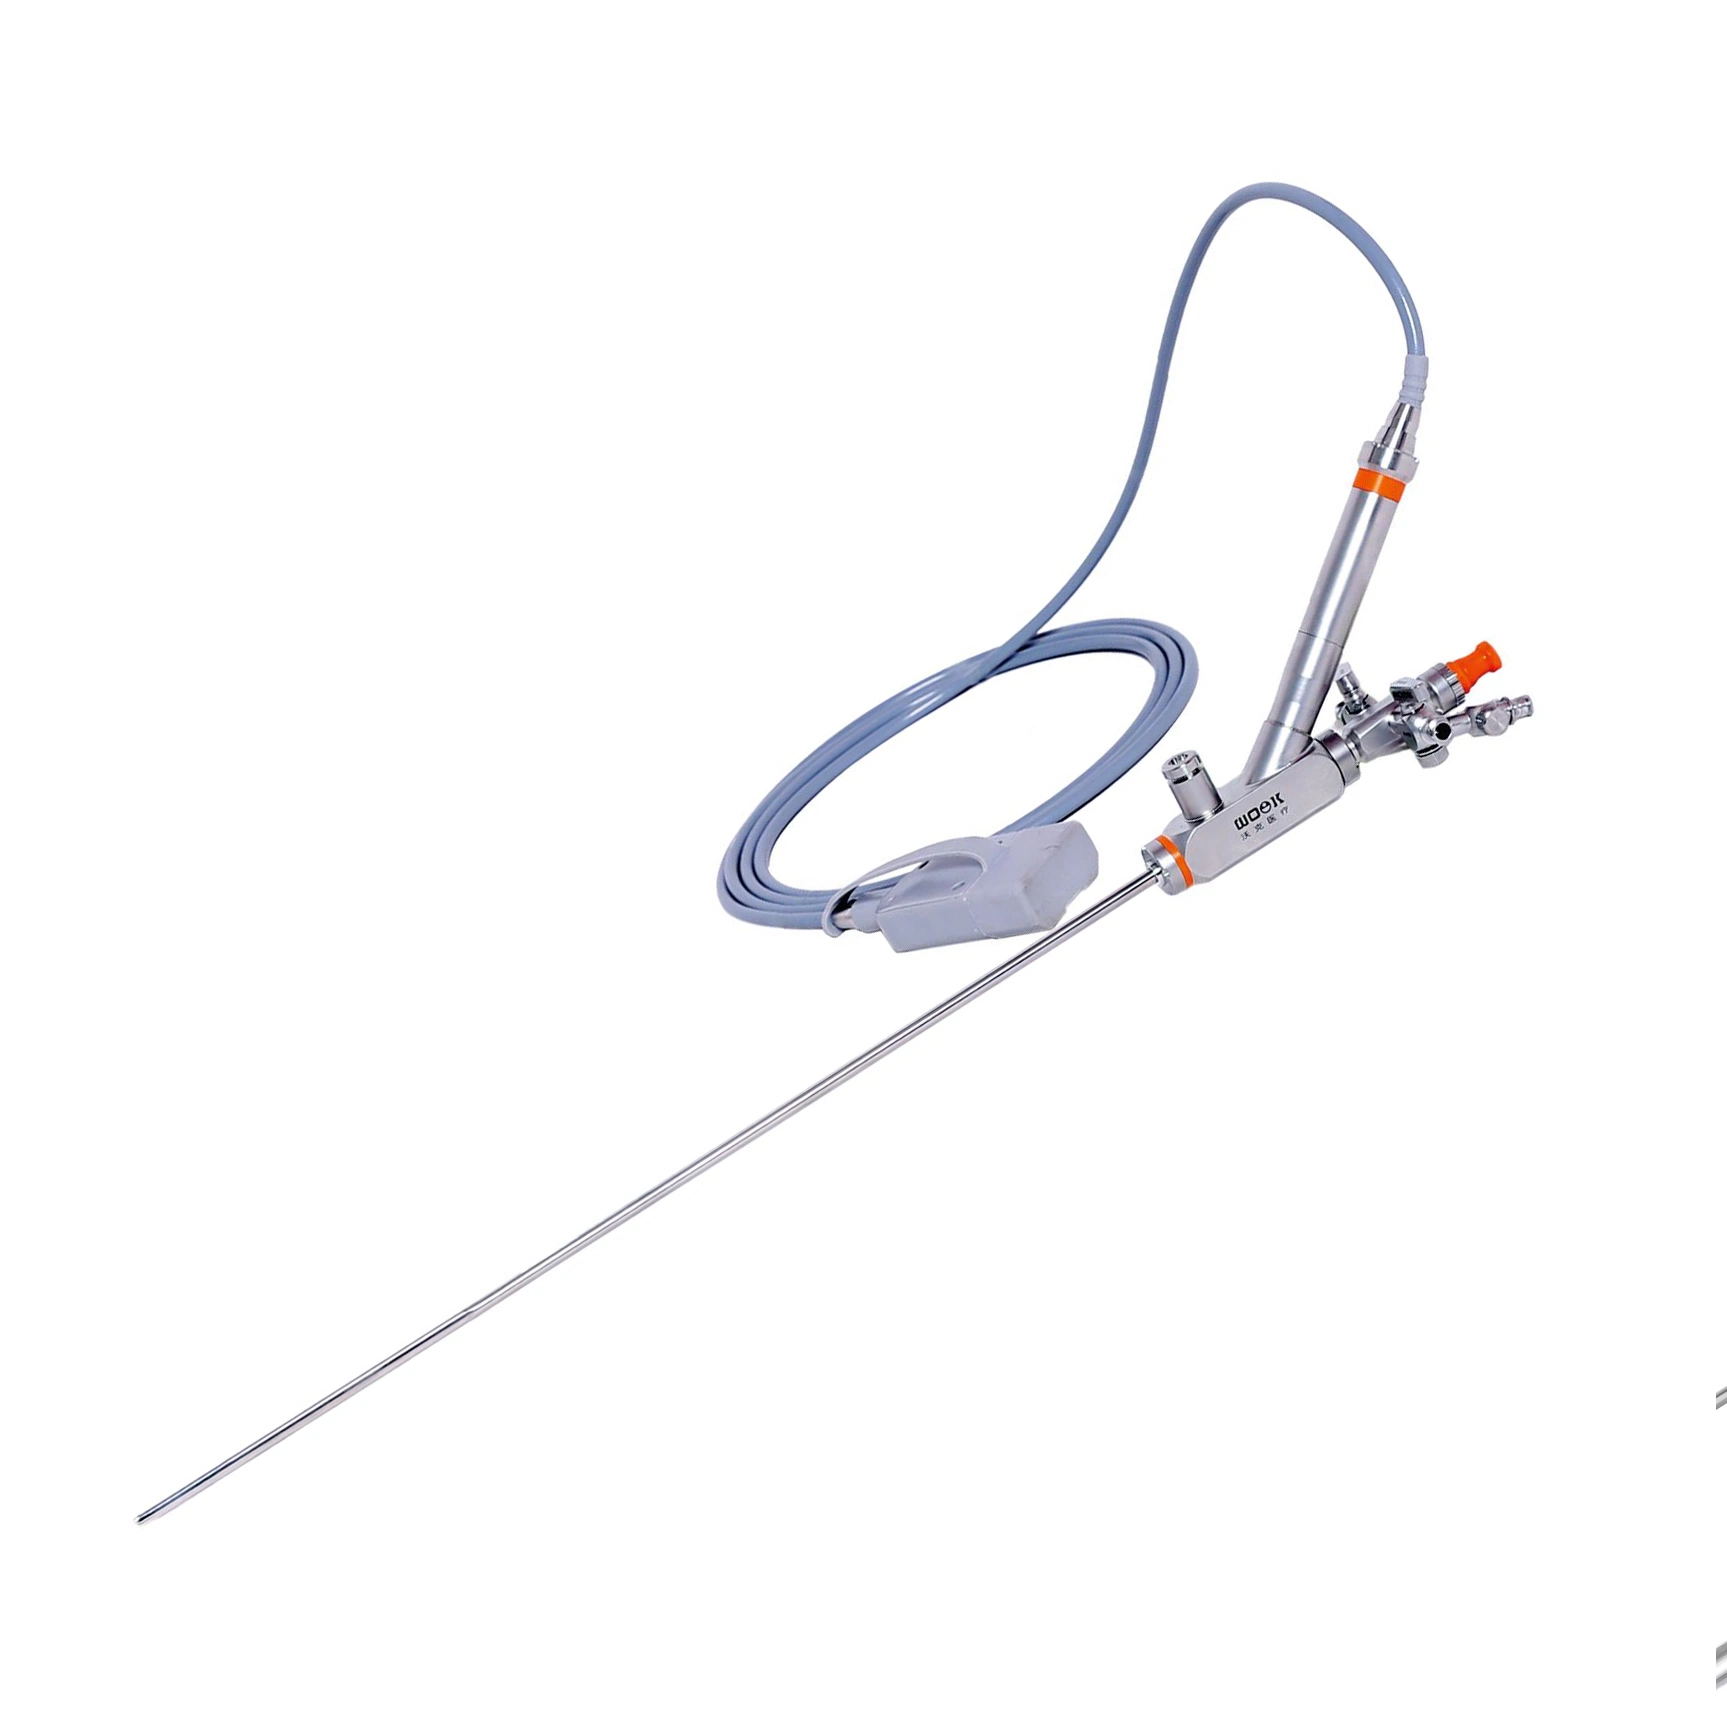 Novo Cystoscope Digital rígido Aço inoxidável Cystoscopy Ininvasivo Urinário cistoscópico Endoscópio da bexiga